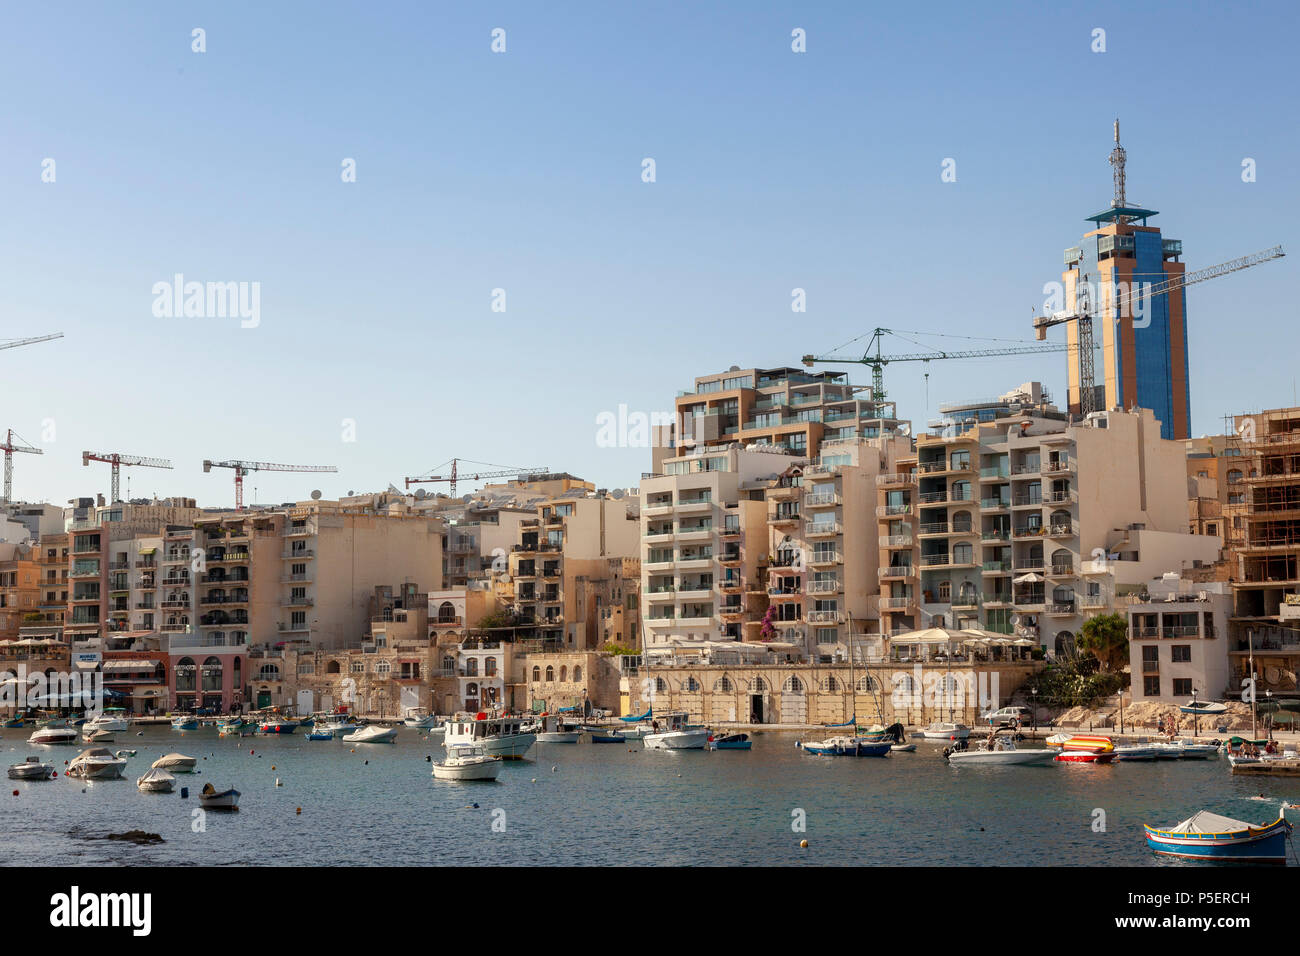 Busy scene of St Julian's Bay, Malta Stock Photo